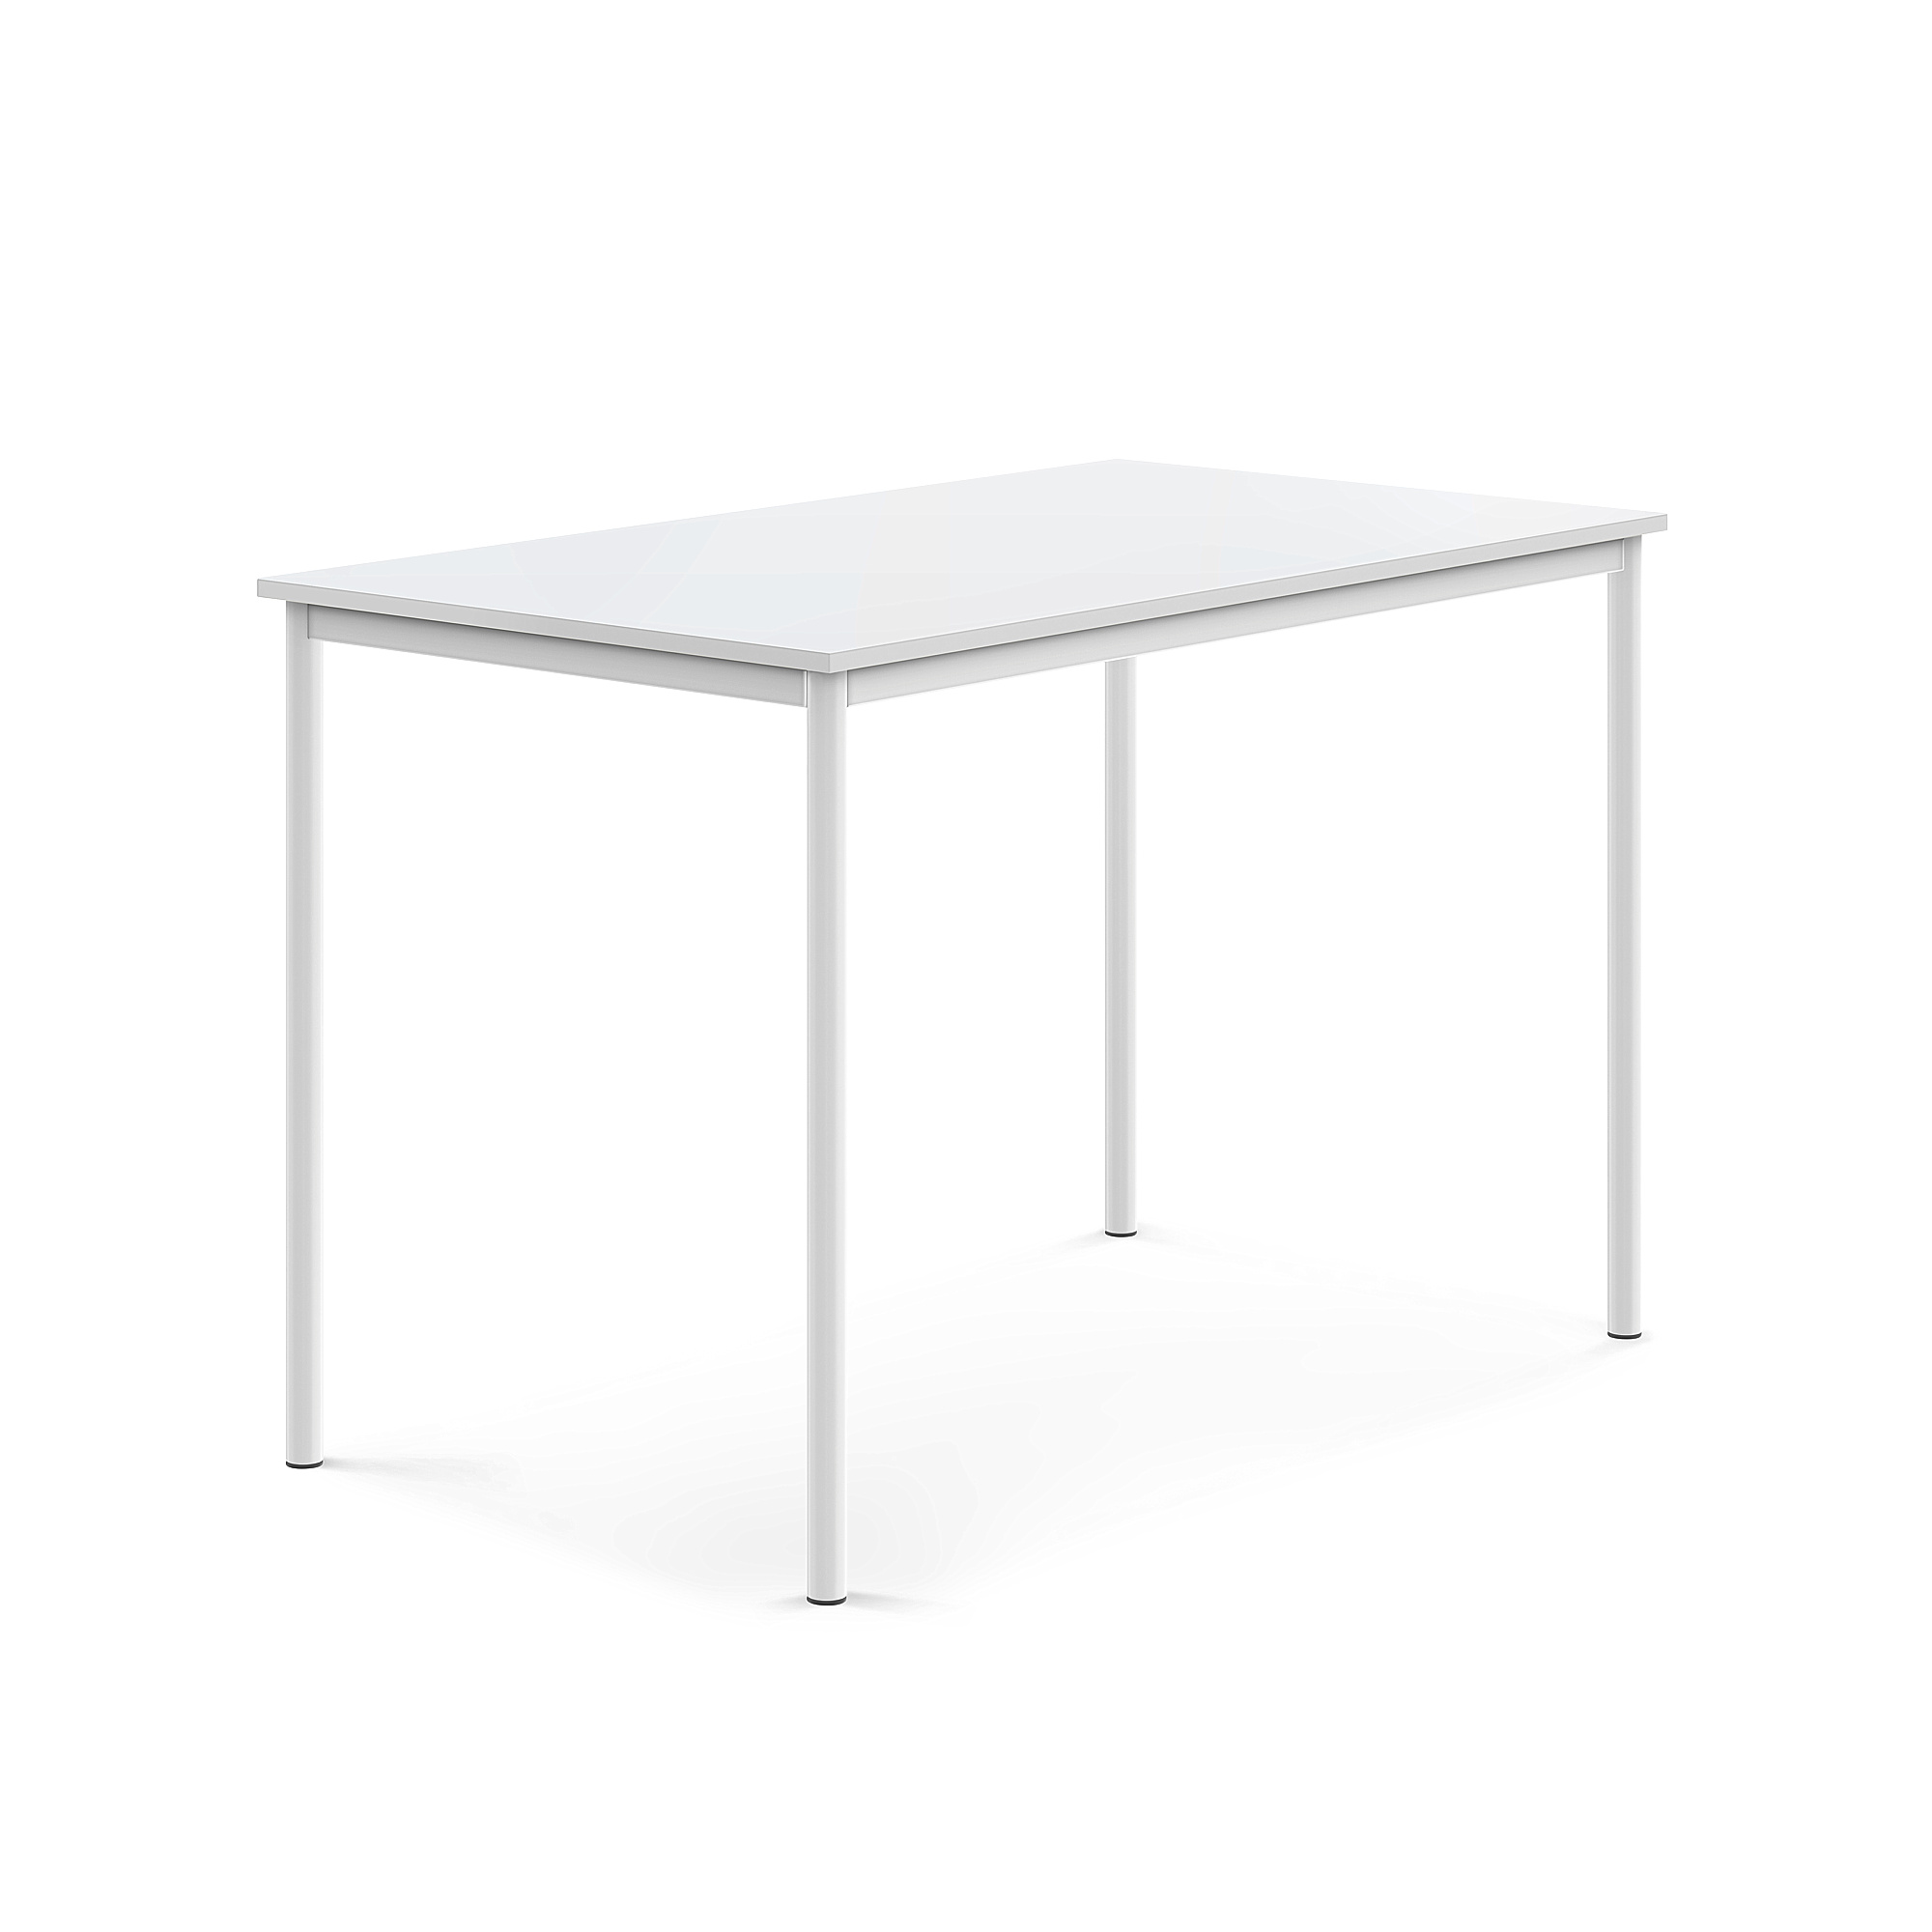 Stůl SONITUS, 1400x800x900 mm, bílé nohy, HPL deska tlumící hluk, bílá